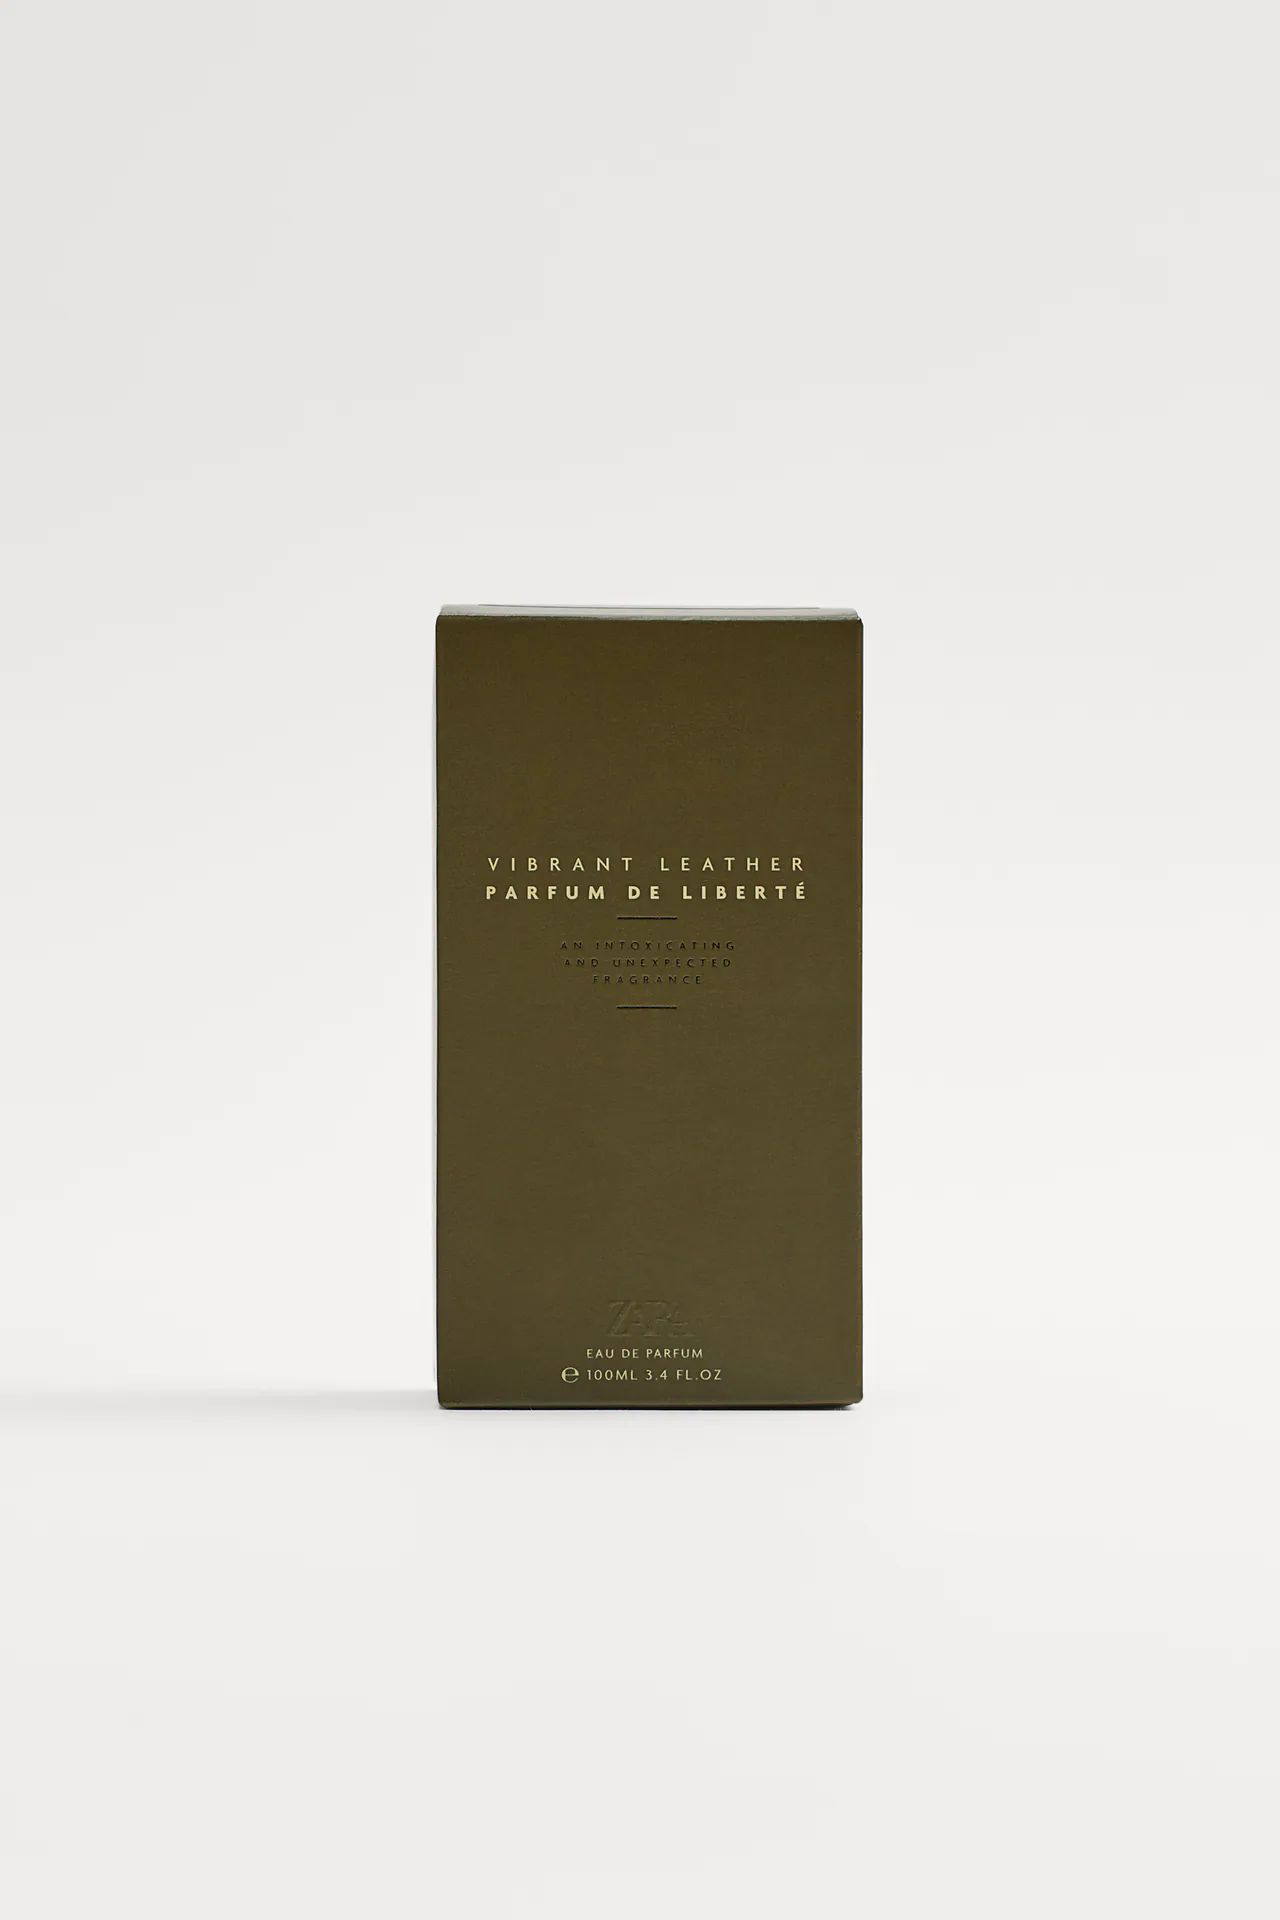 Vibrant Leather Parfum de Liberte Zara cologne - a fragrance for men 2021